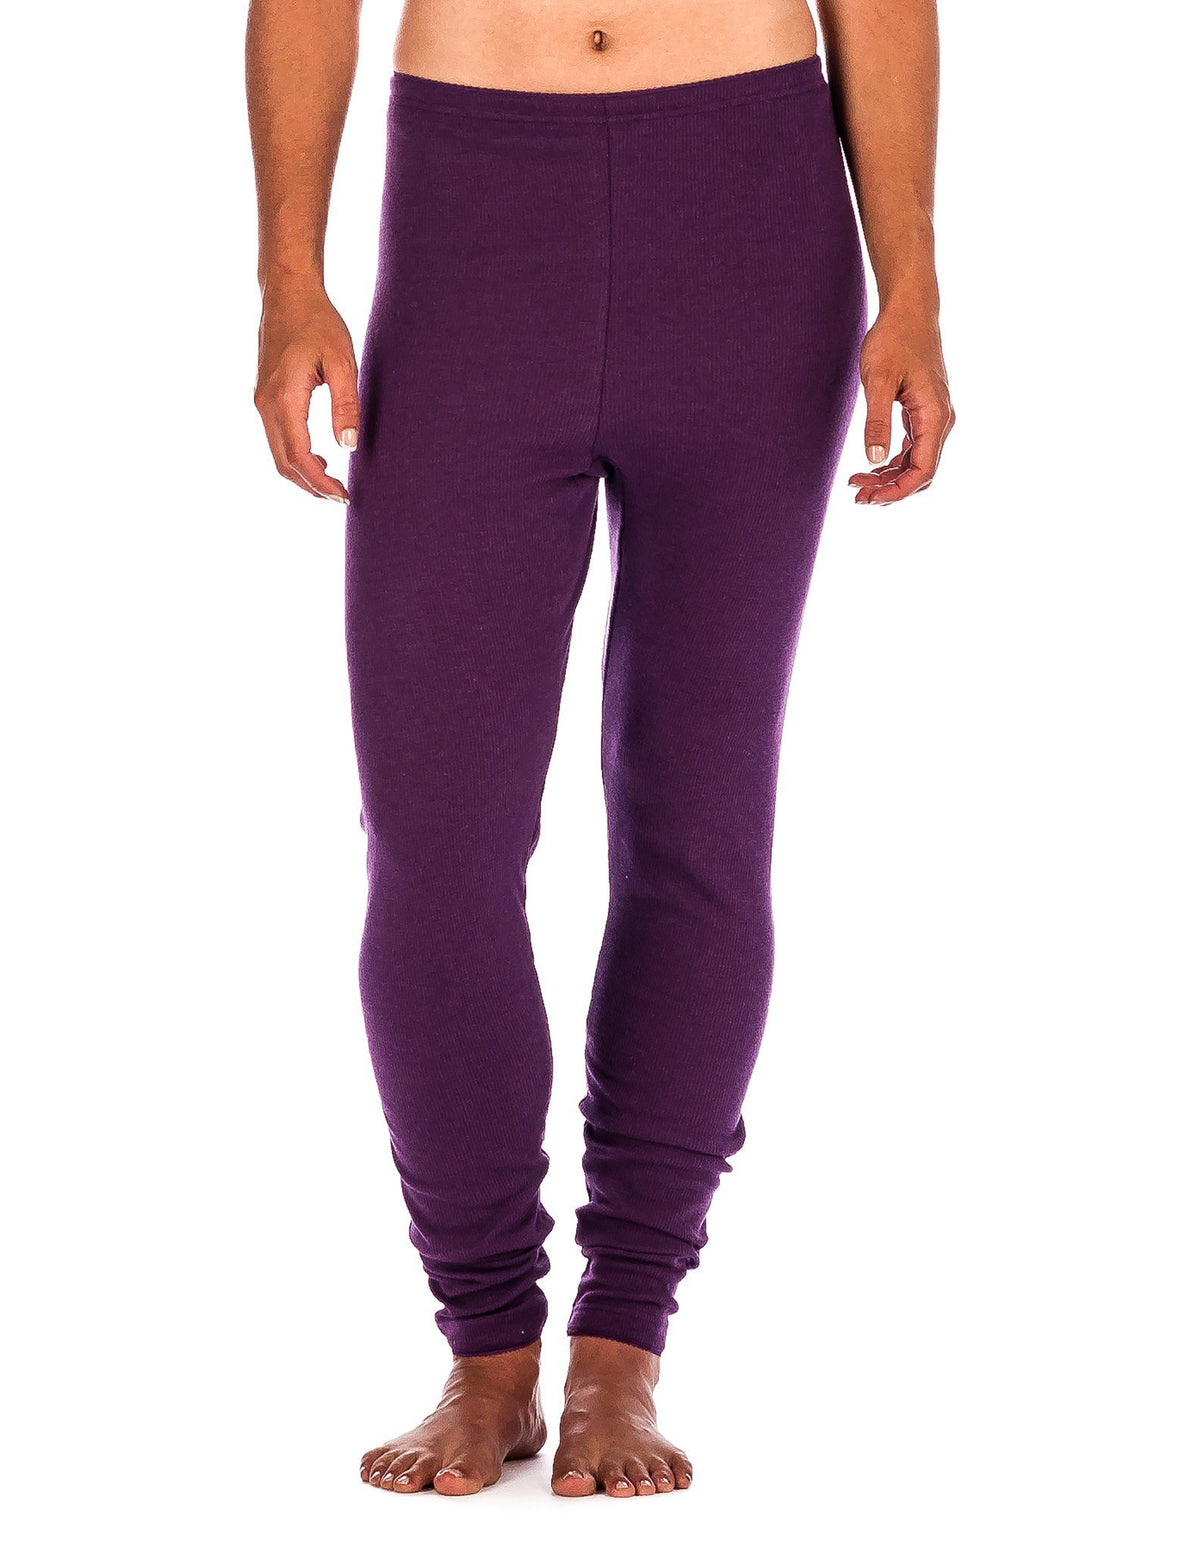 Women's Classic Waffle Knit Thermal Long John Pants - Purple